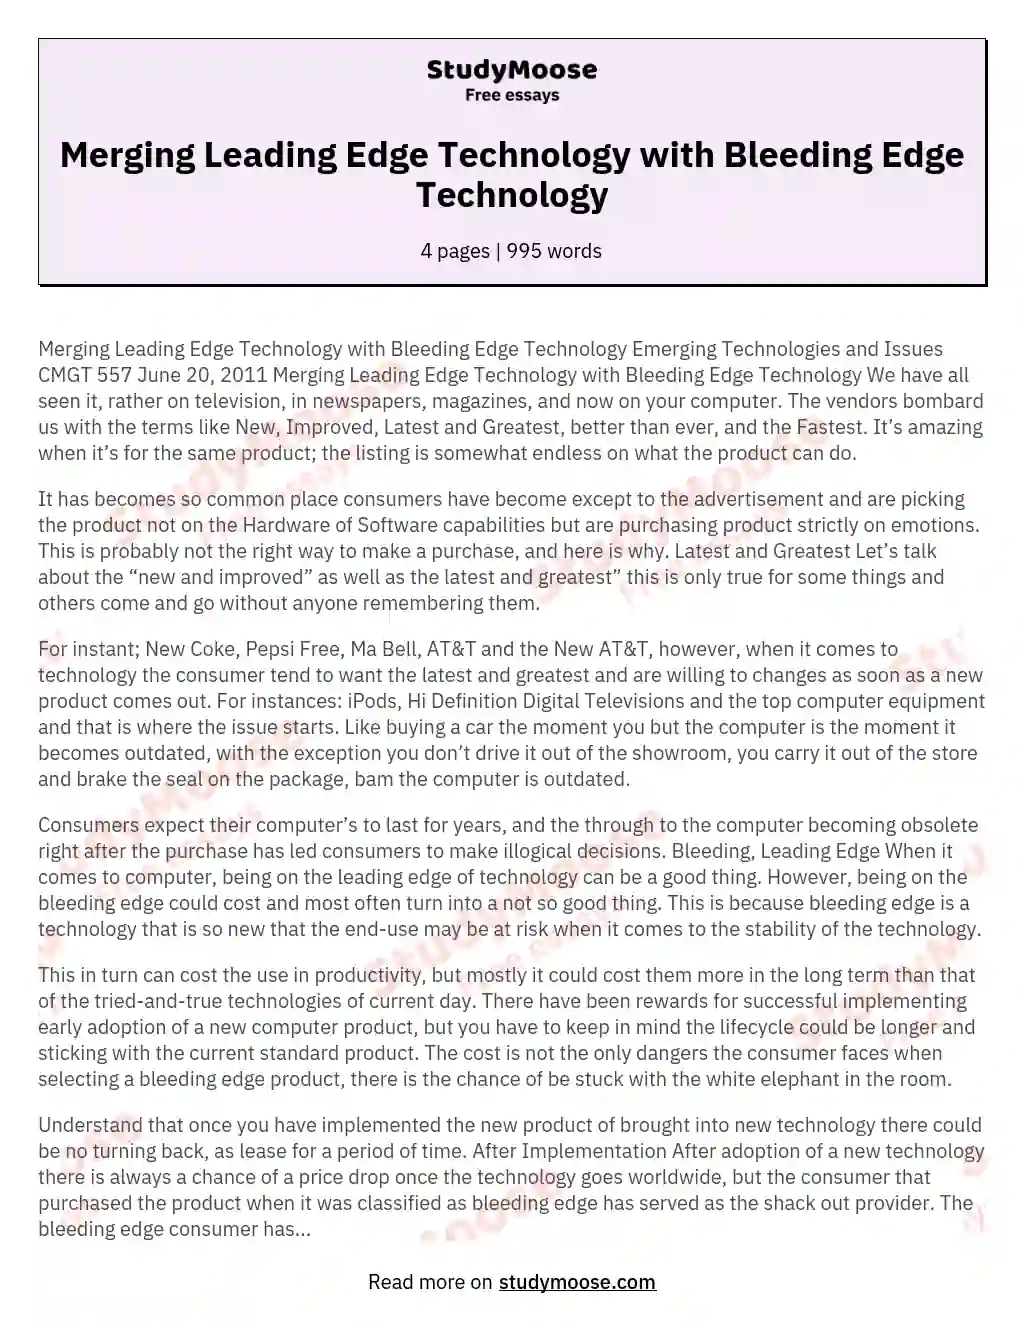 Merging Leading Edge Technology with Bleeding Edge Technology